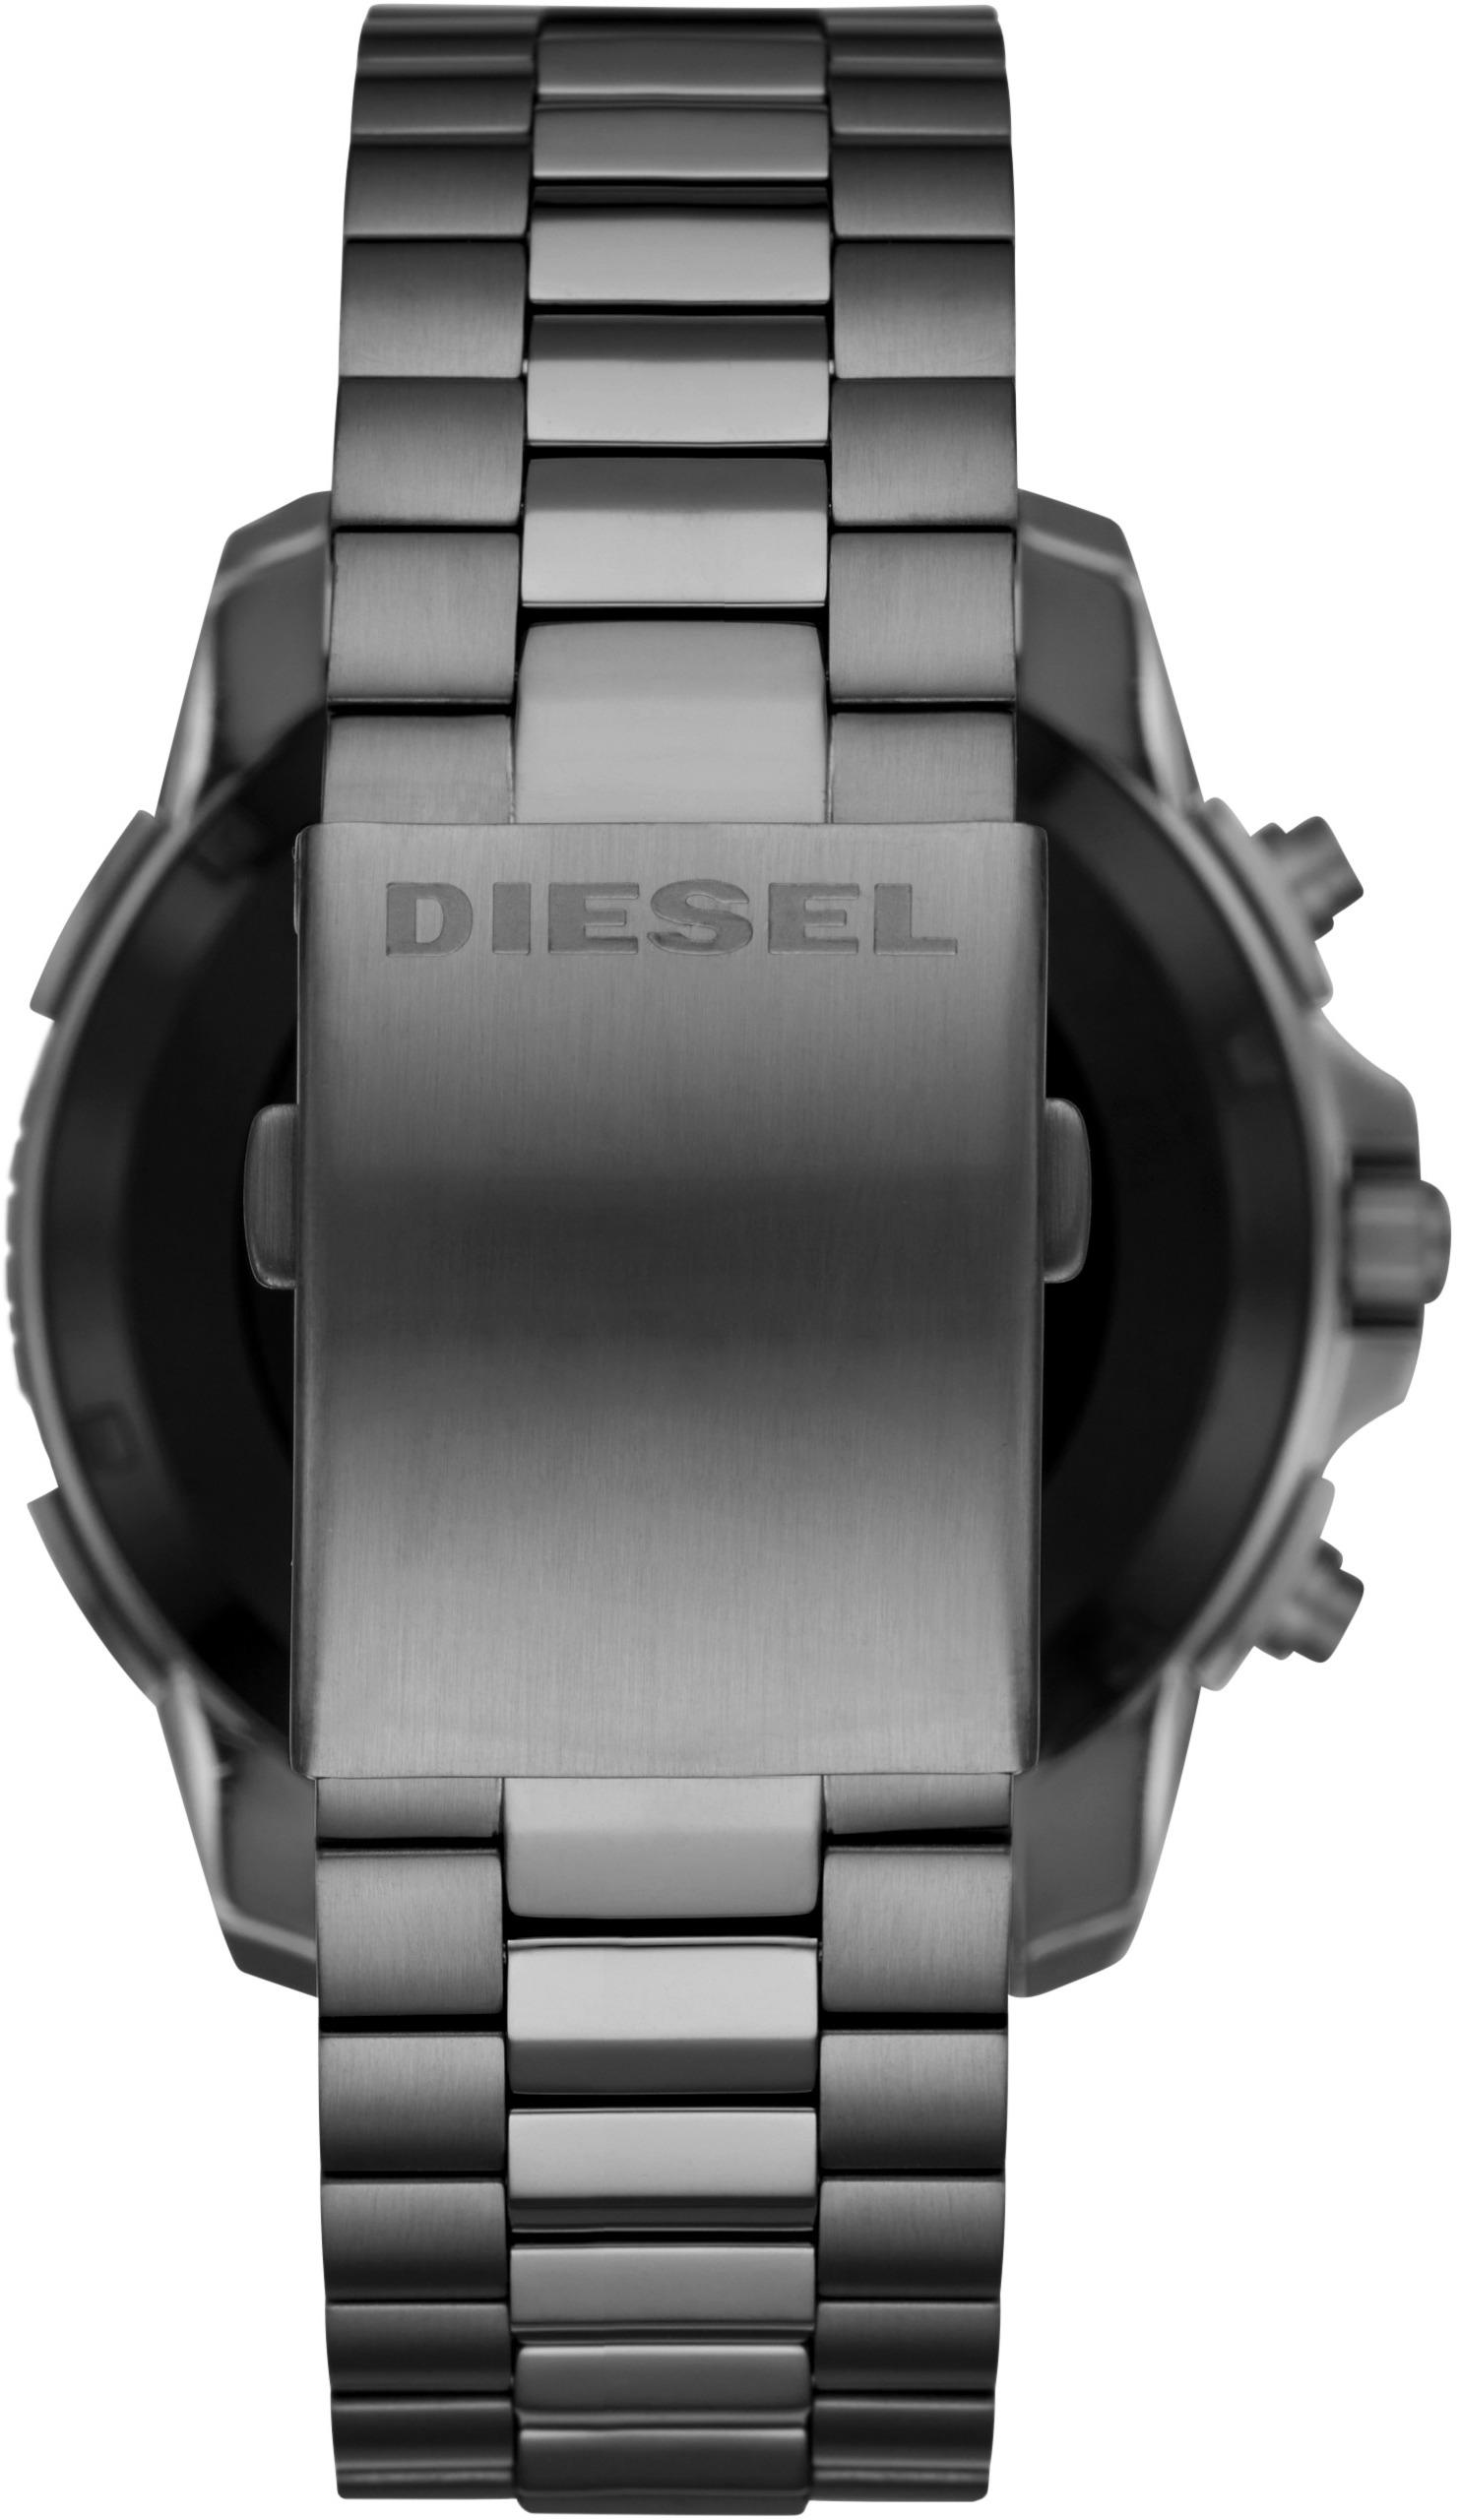 diesel on full guard touchscreen gunmetal stainless steel smartwatch dzt2004